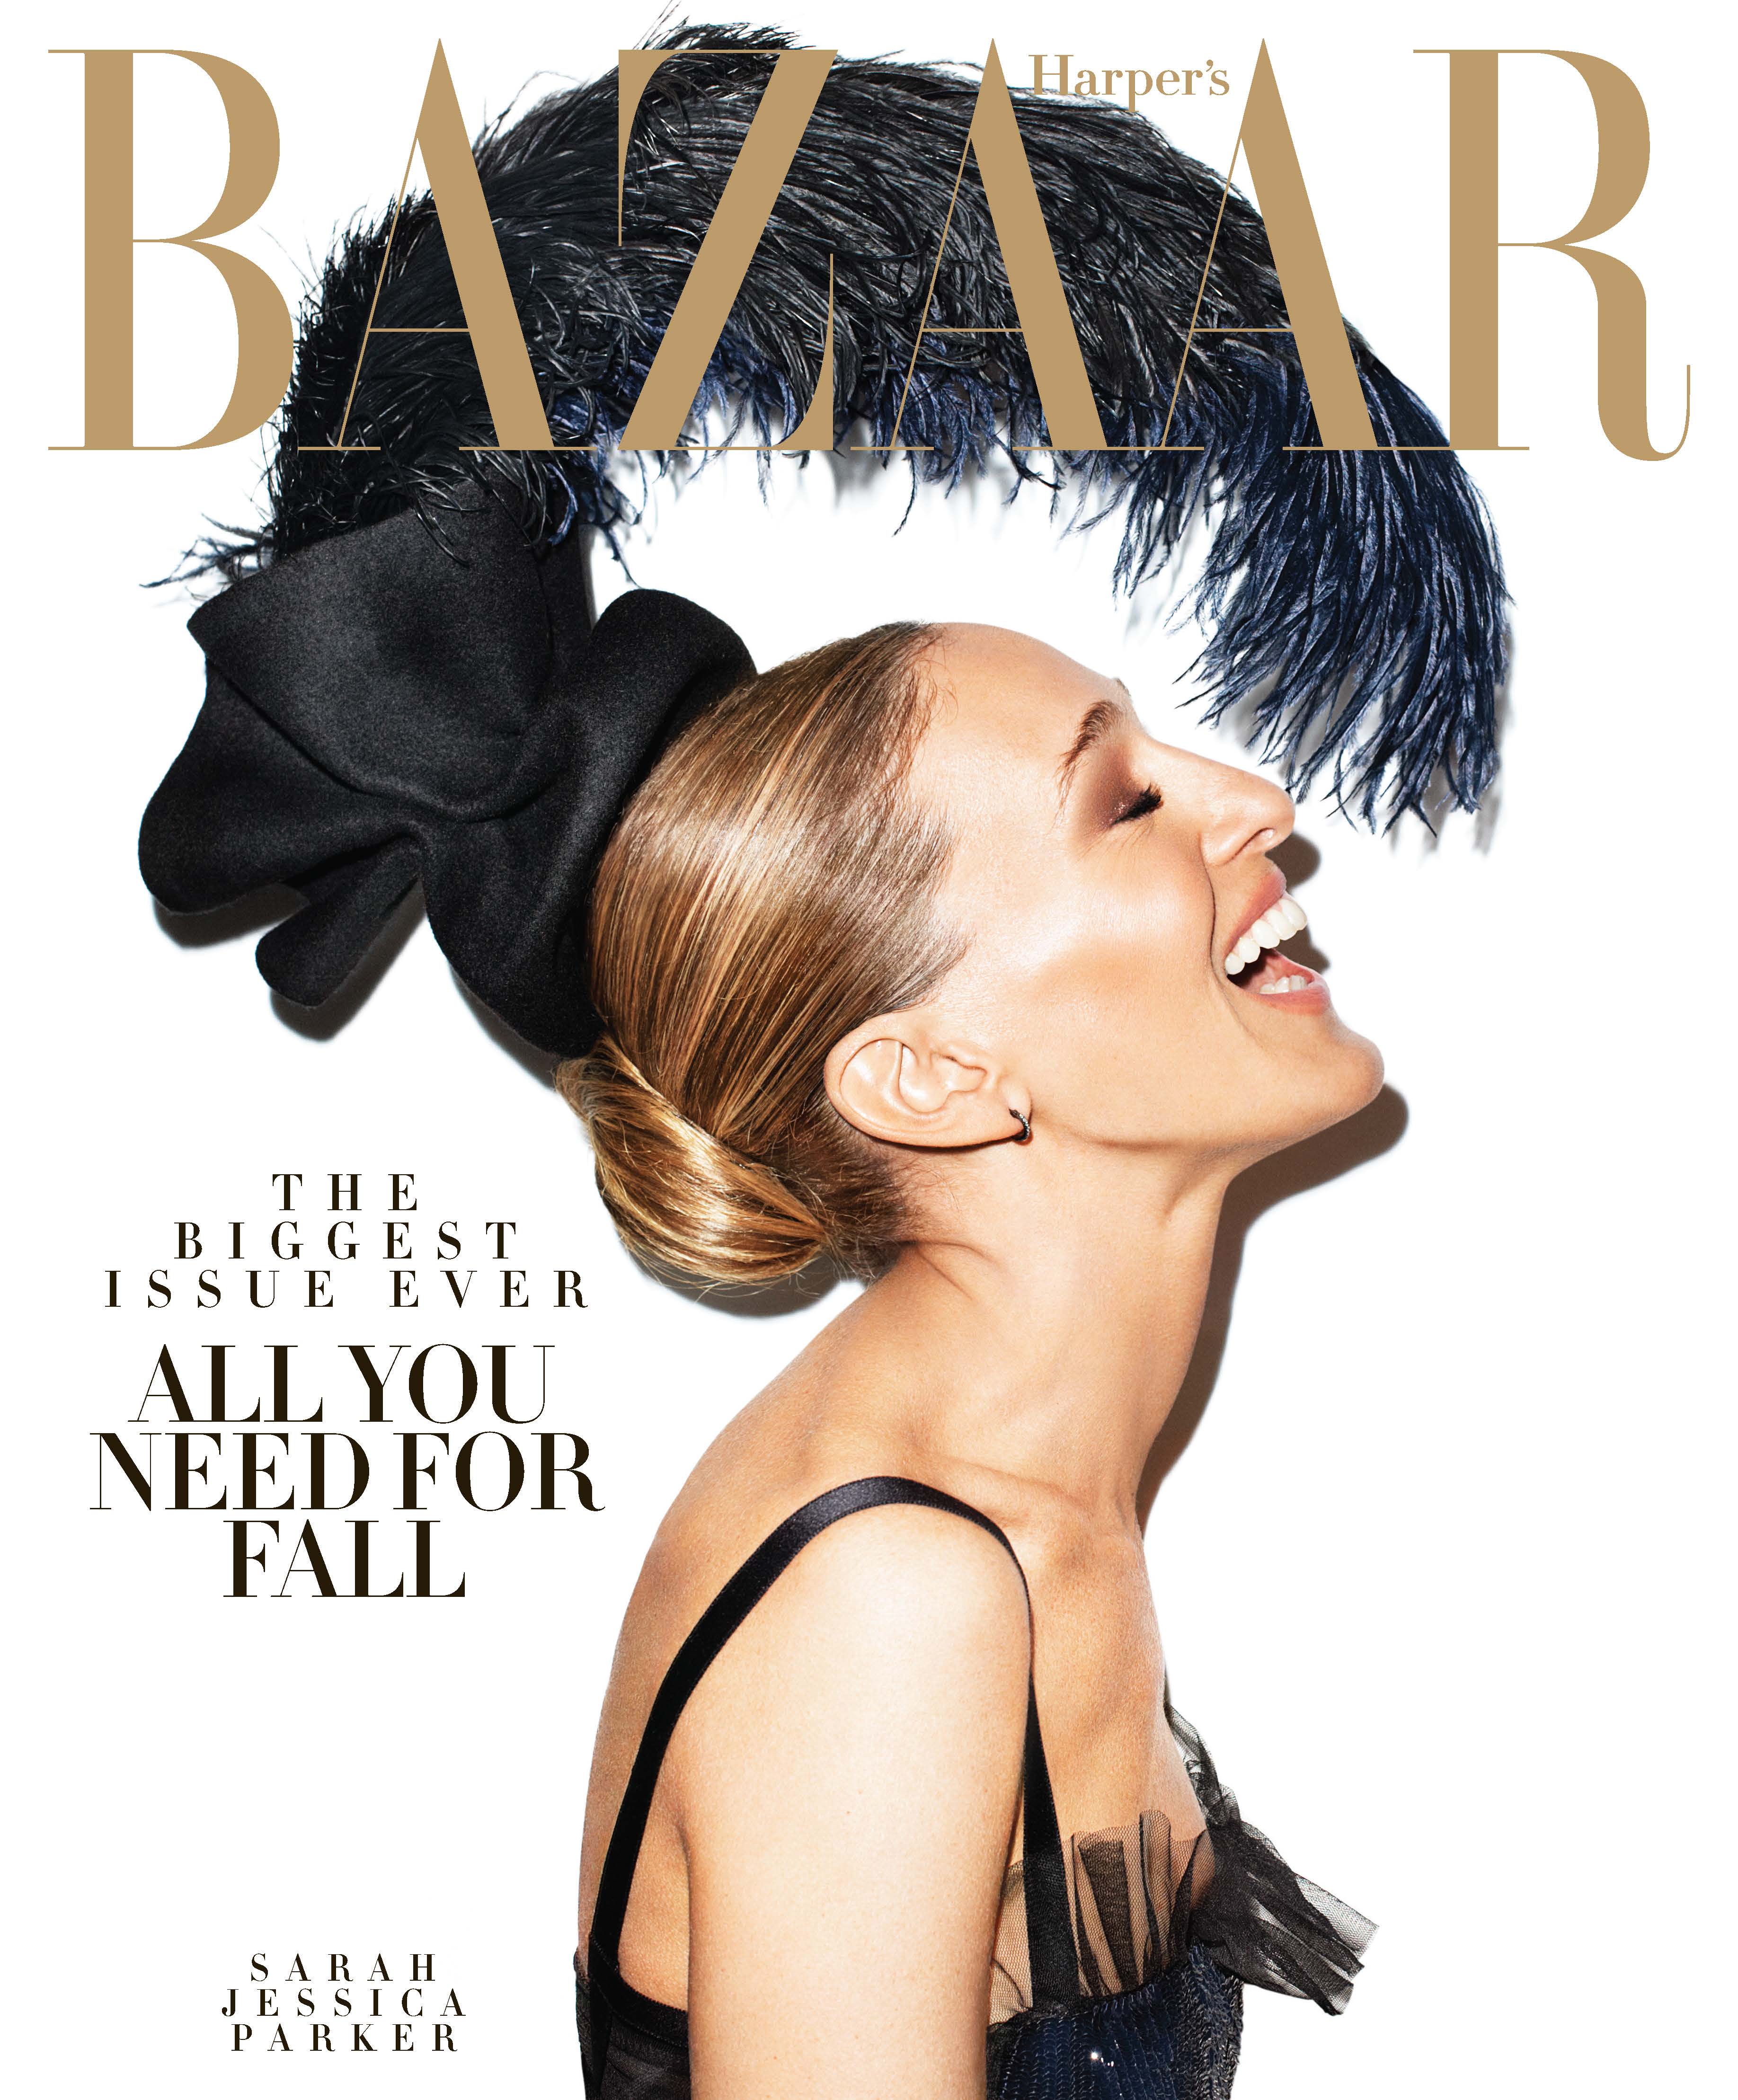 Harper's Bazaar-September, "Sarah Jessica Parker"